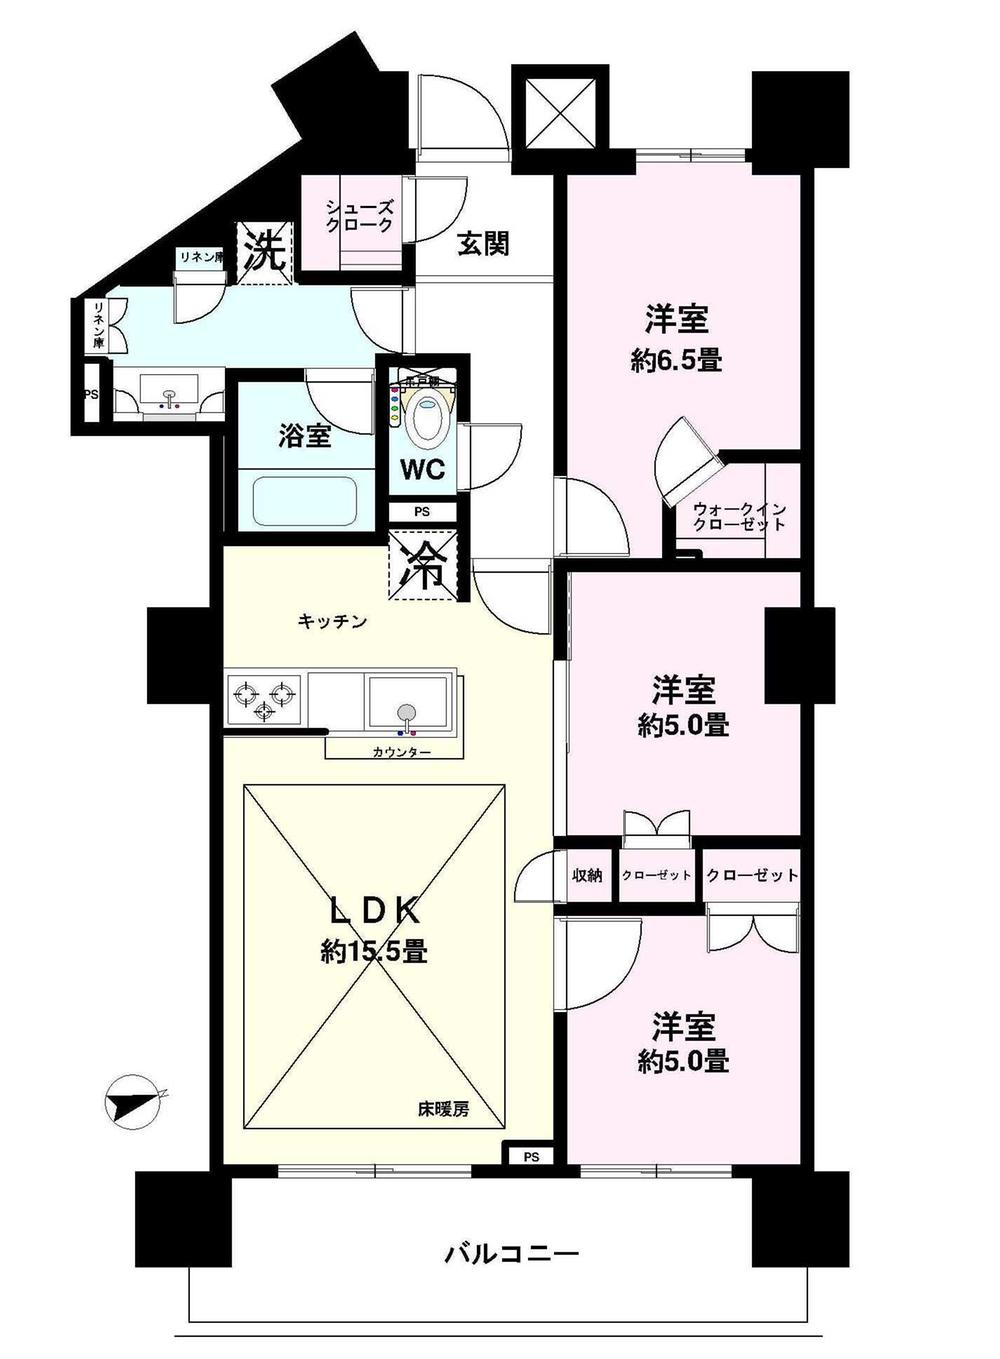 Floor plan. 3LDK, Price 34,800,000 yen, Occupied area 74.04 sq m , Balcony area 11.25 sq m